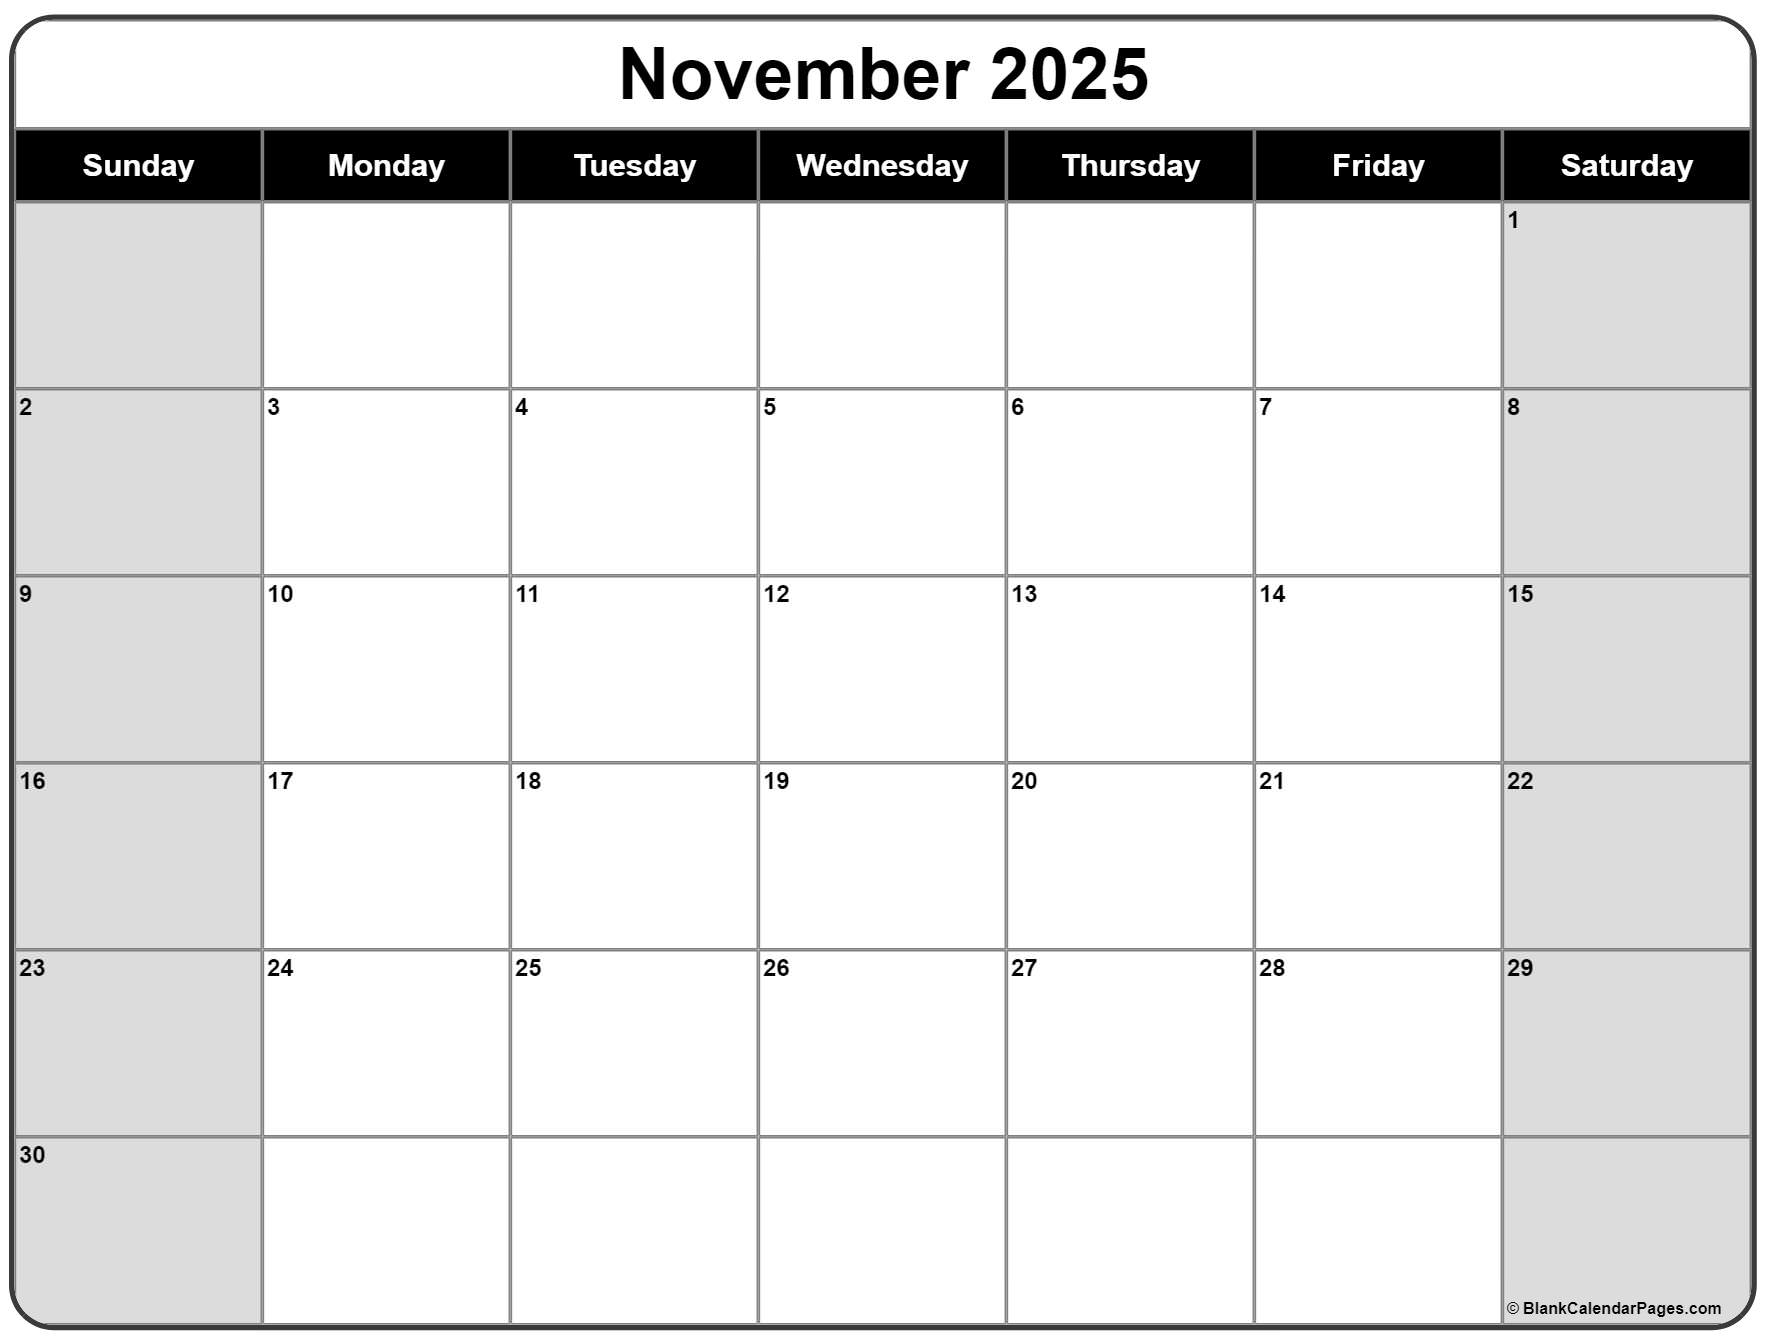 November 2025 calendar free printable calendar